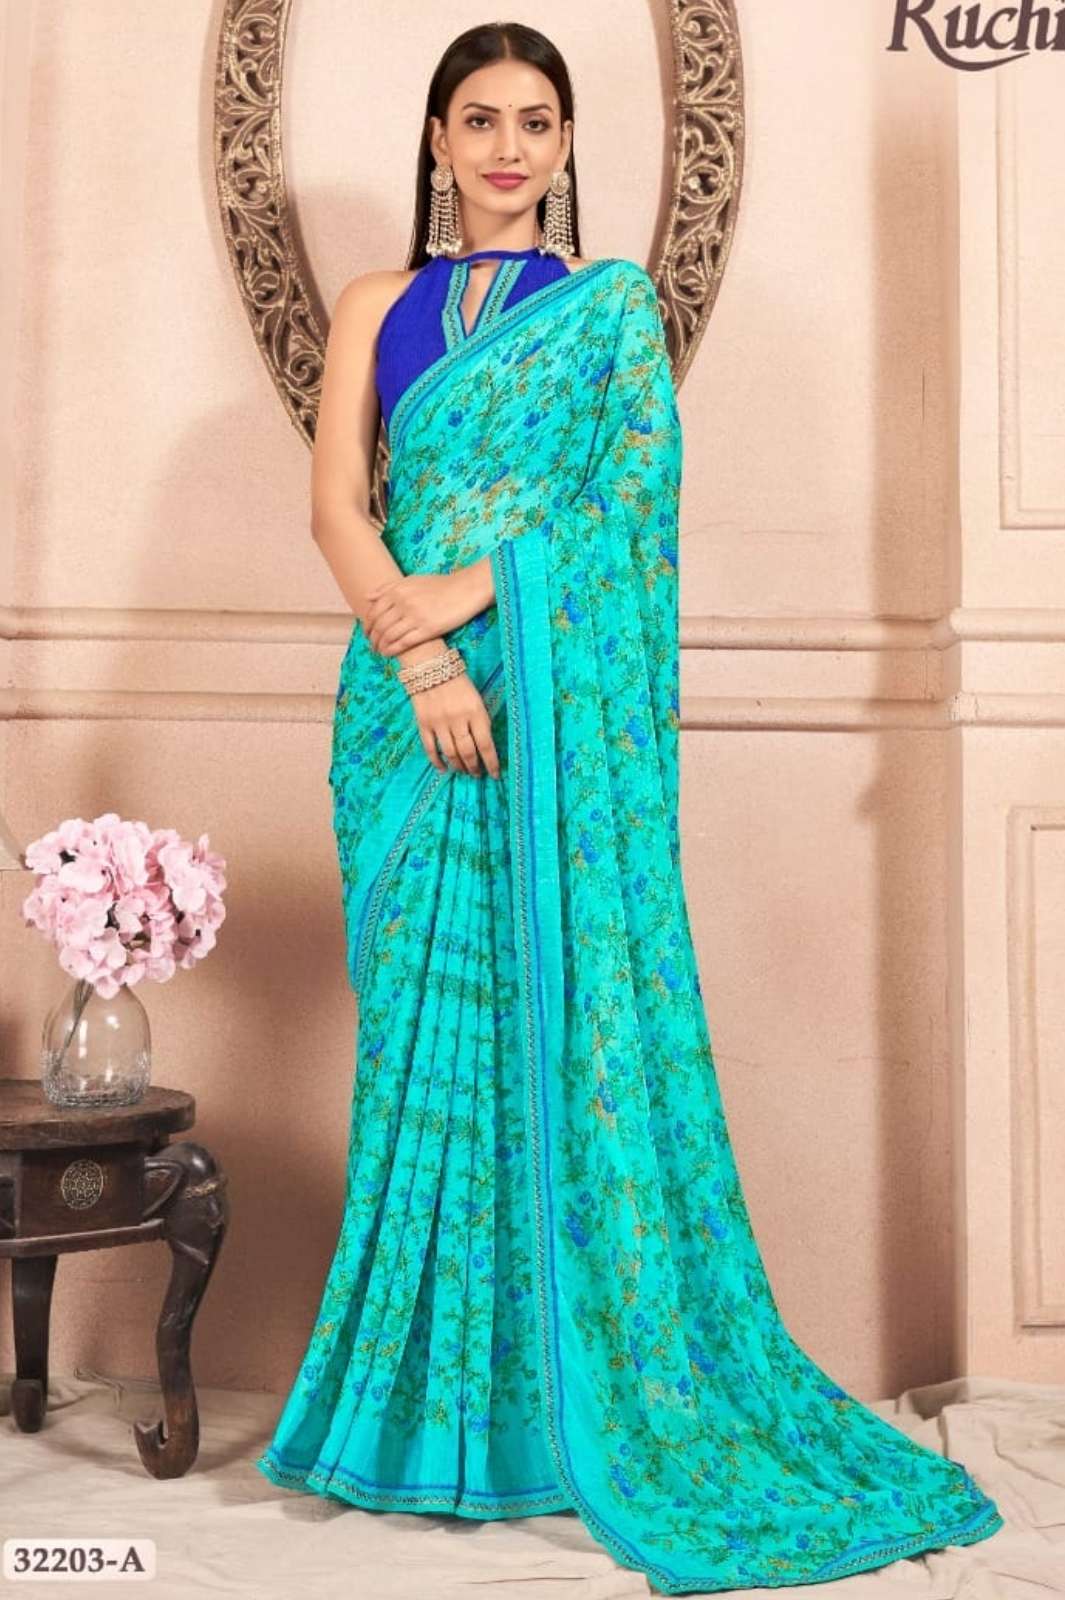 RUCHI 6431 Savyaa vol-2 casual wear designer saree